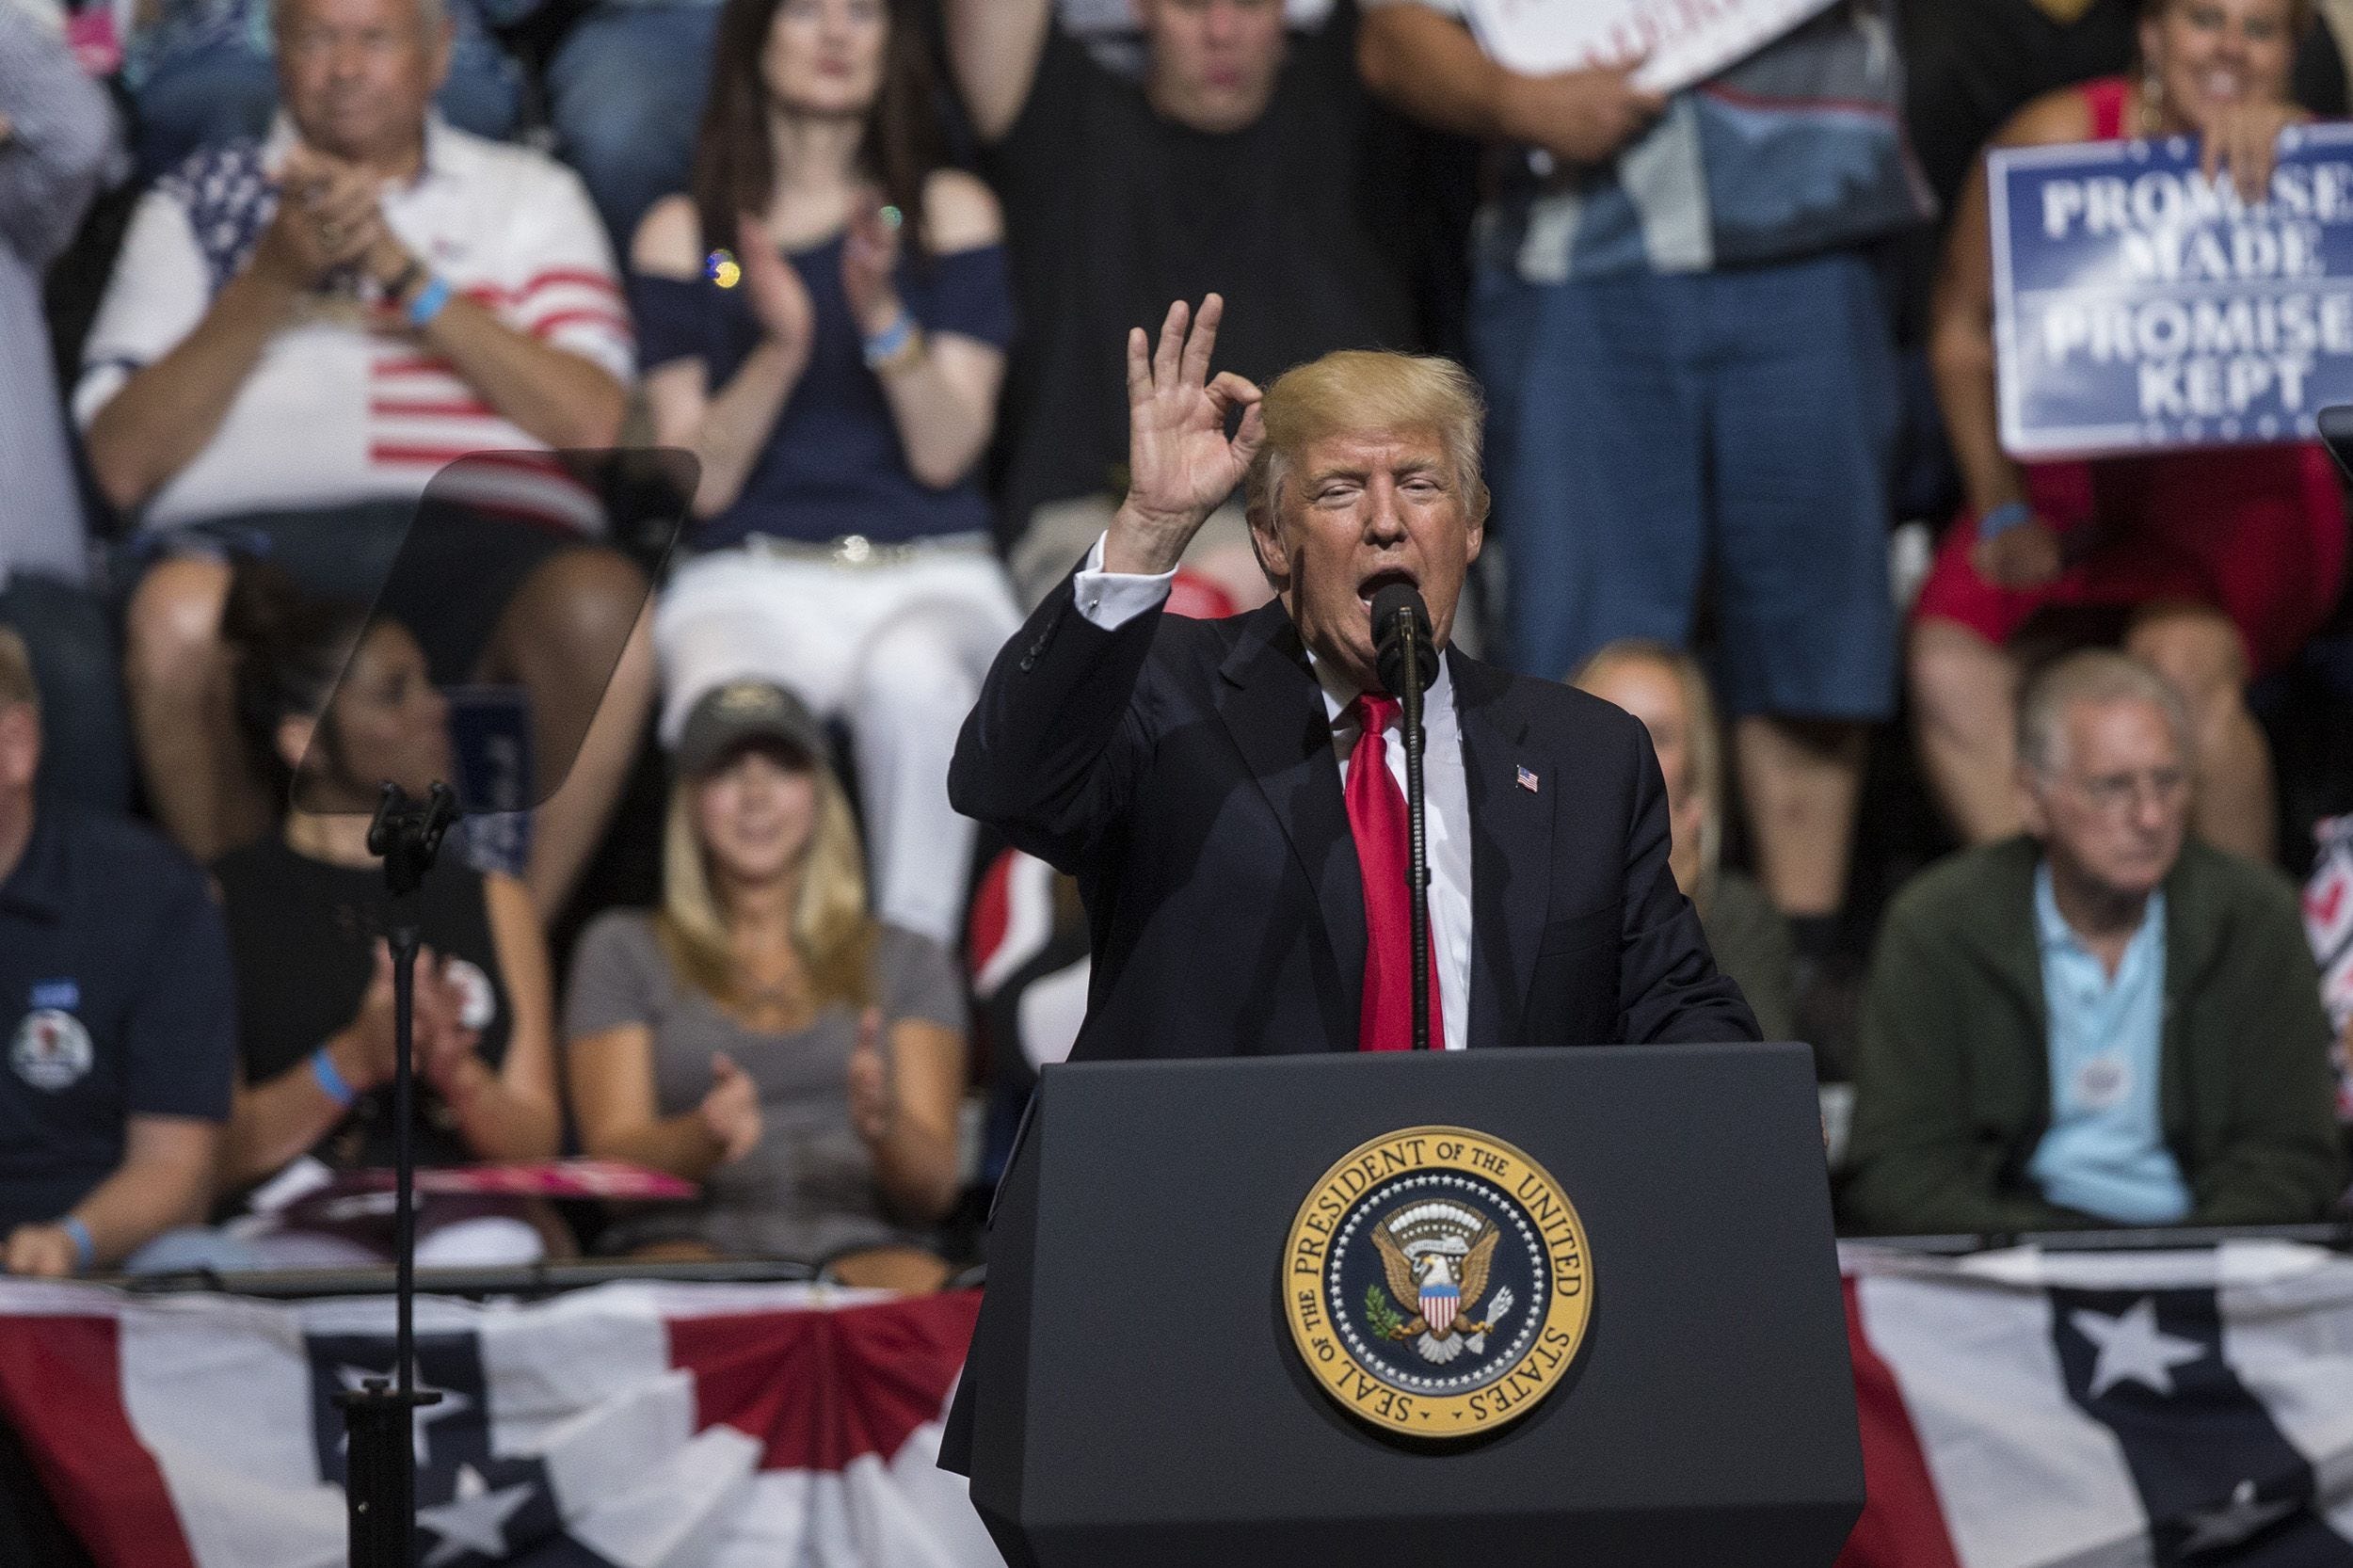 Fact check: Trump makes misleading claims at Iowa rally